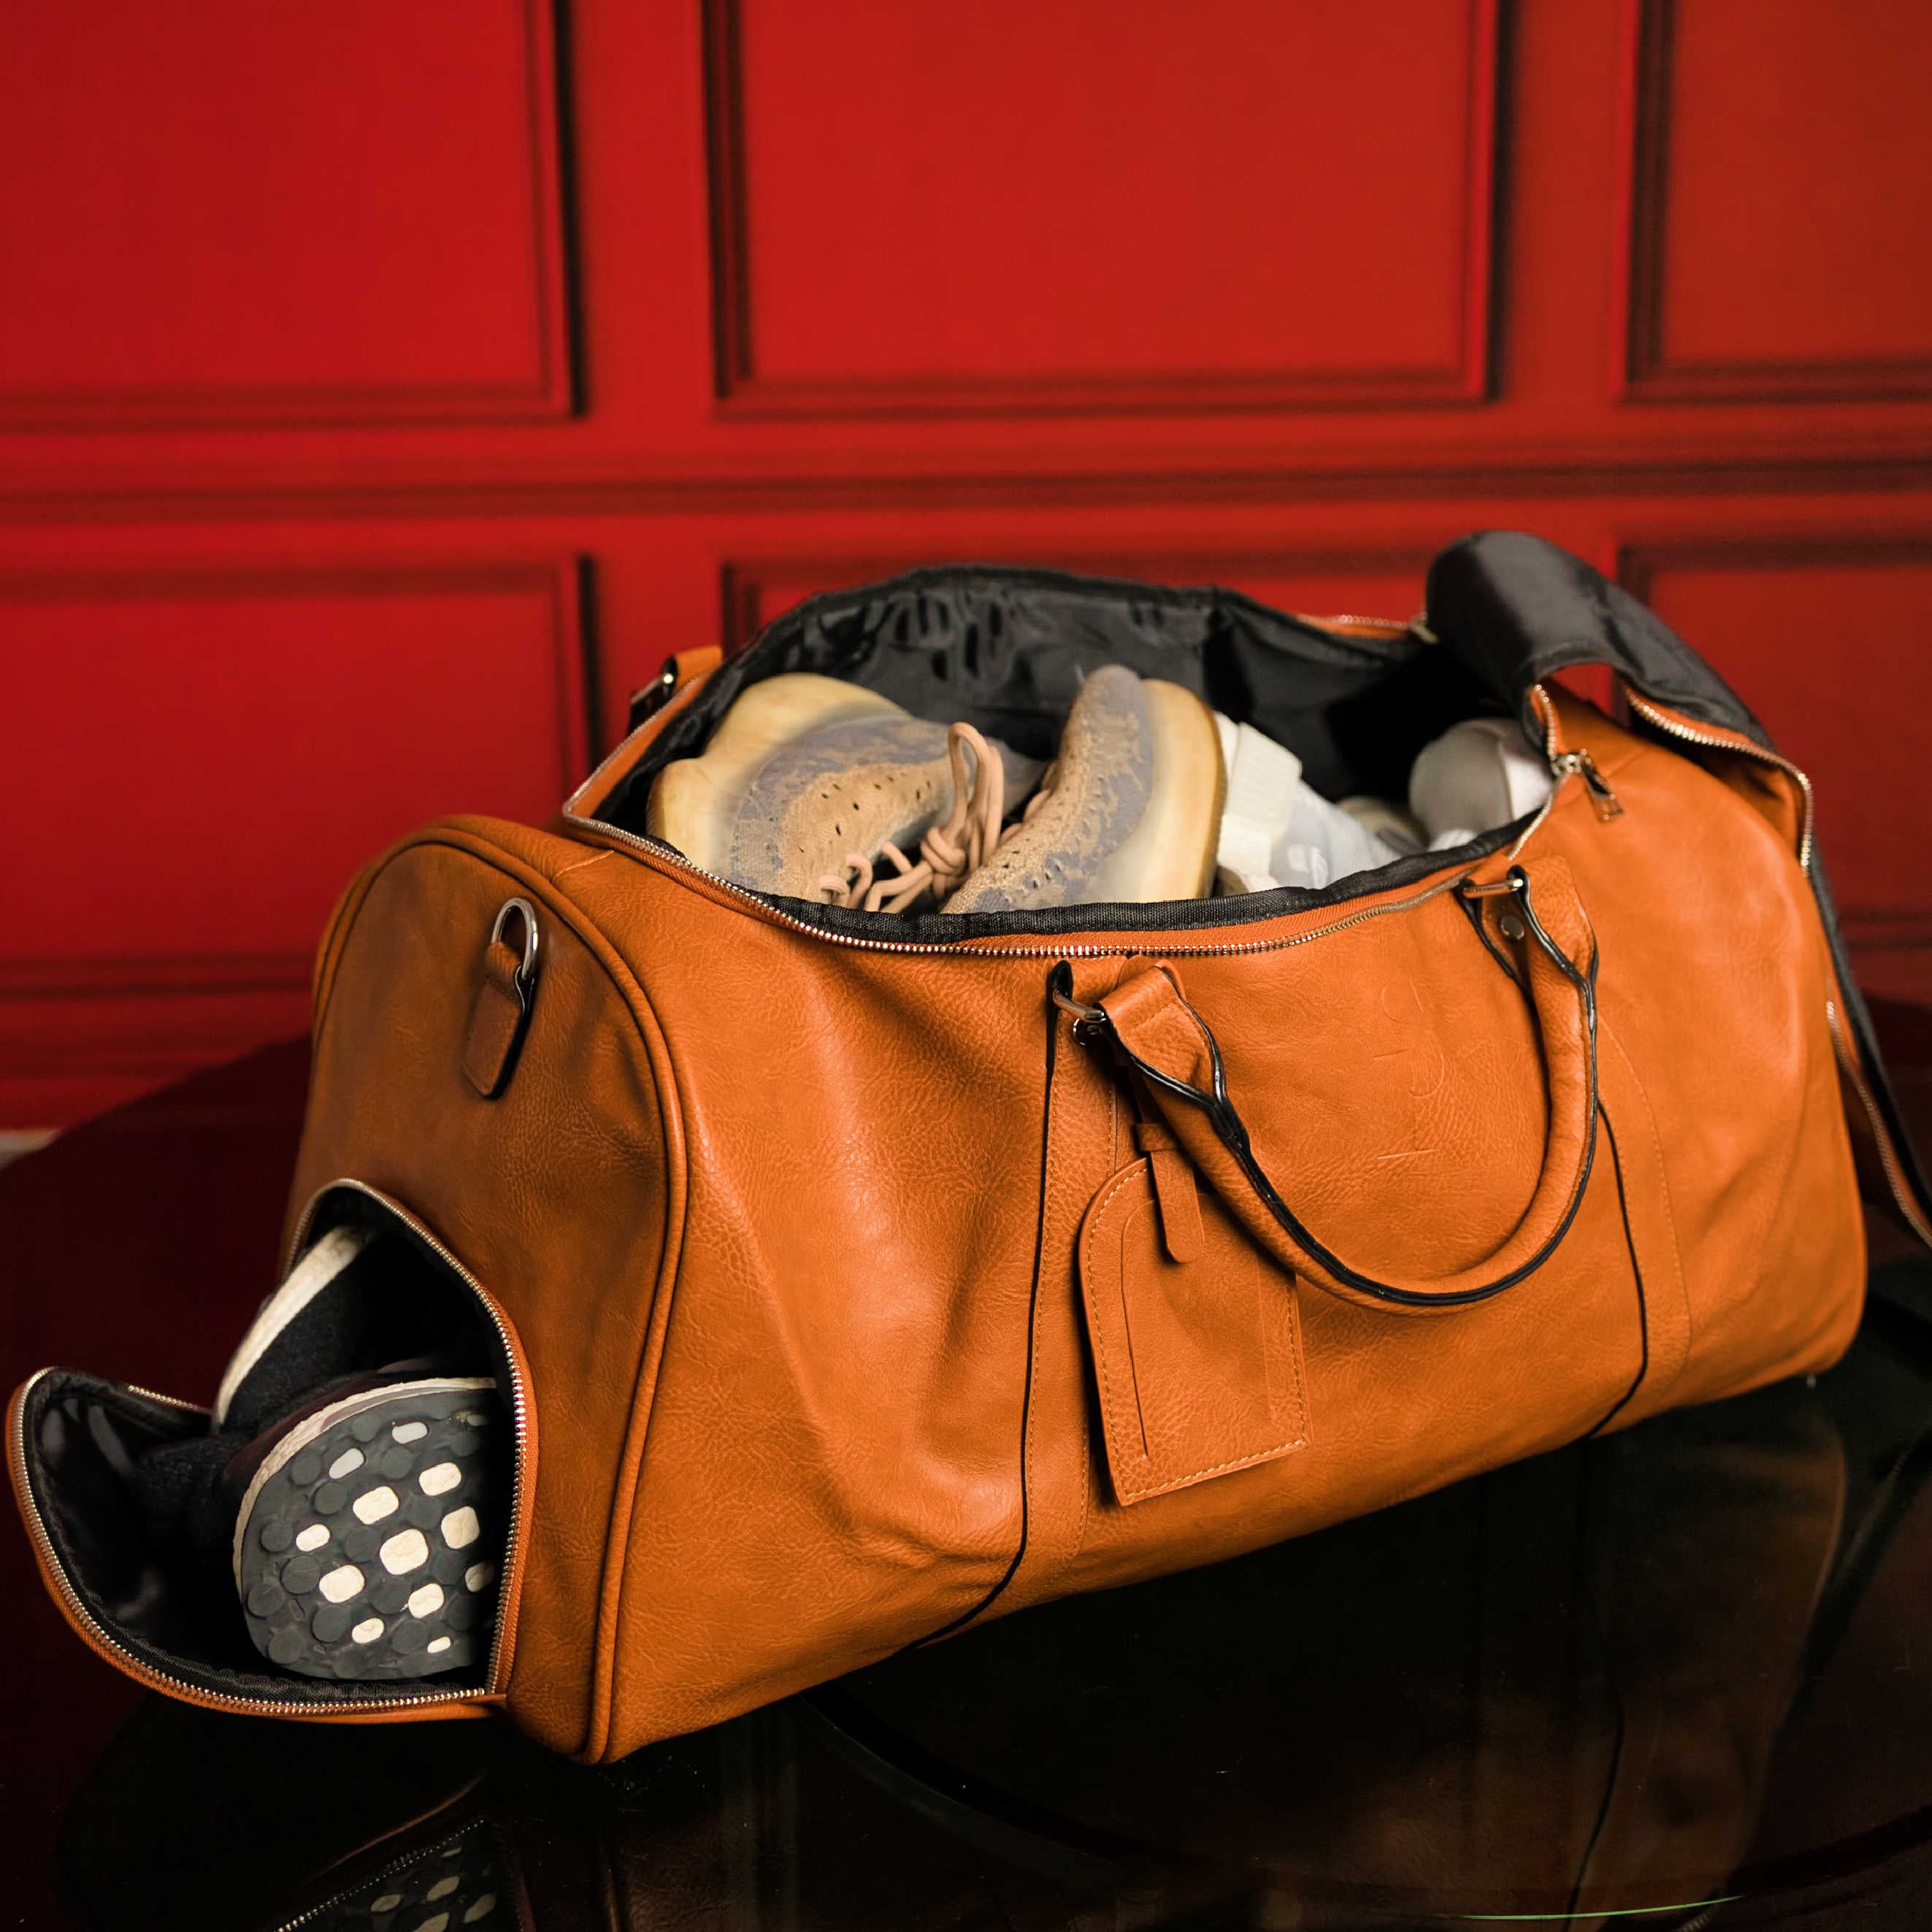 Brown Tumbled Leather Signature Bag Set (Signature and Duffle Bag) - Sole Premise